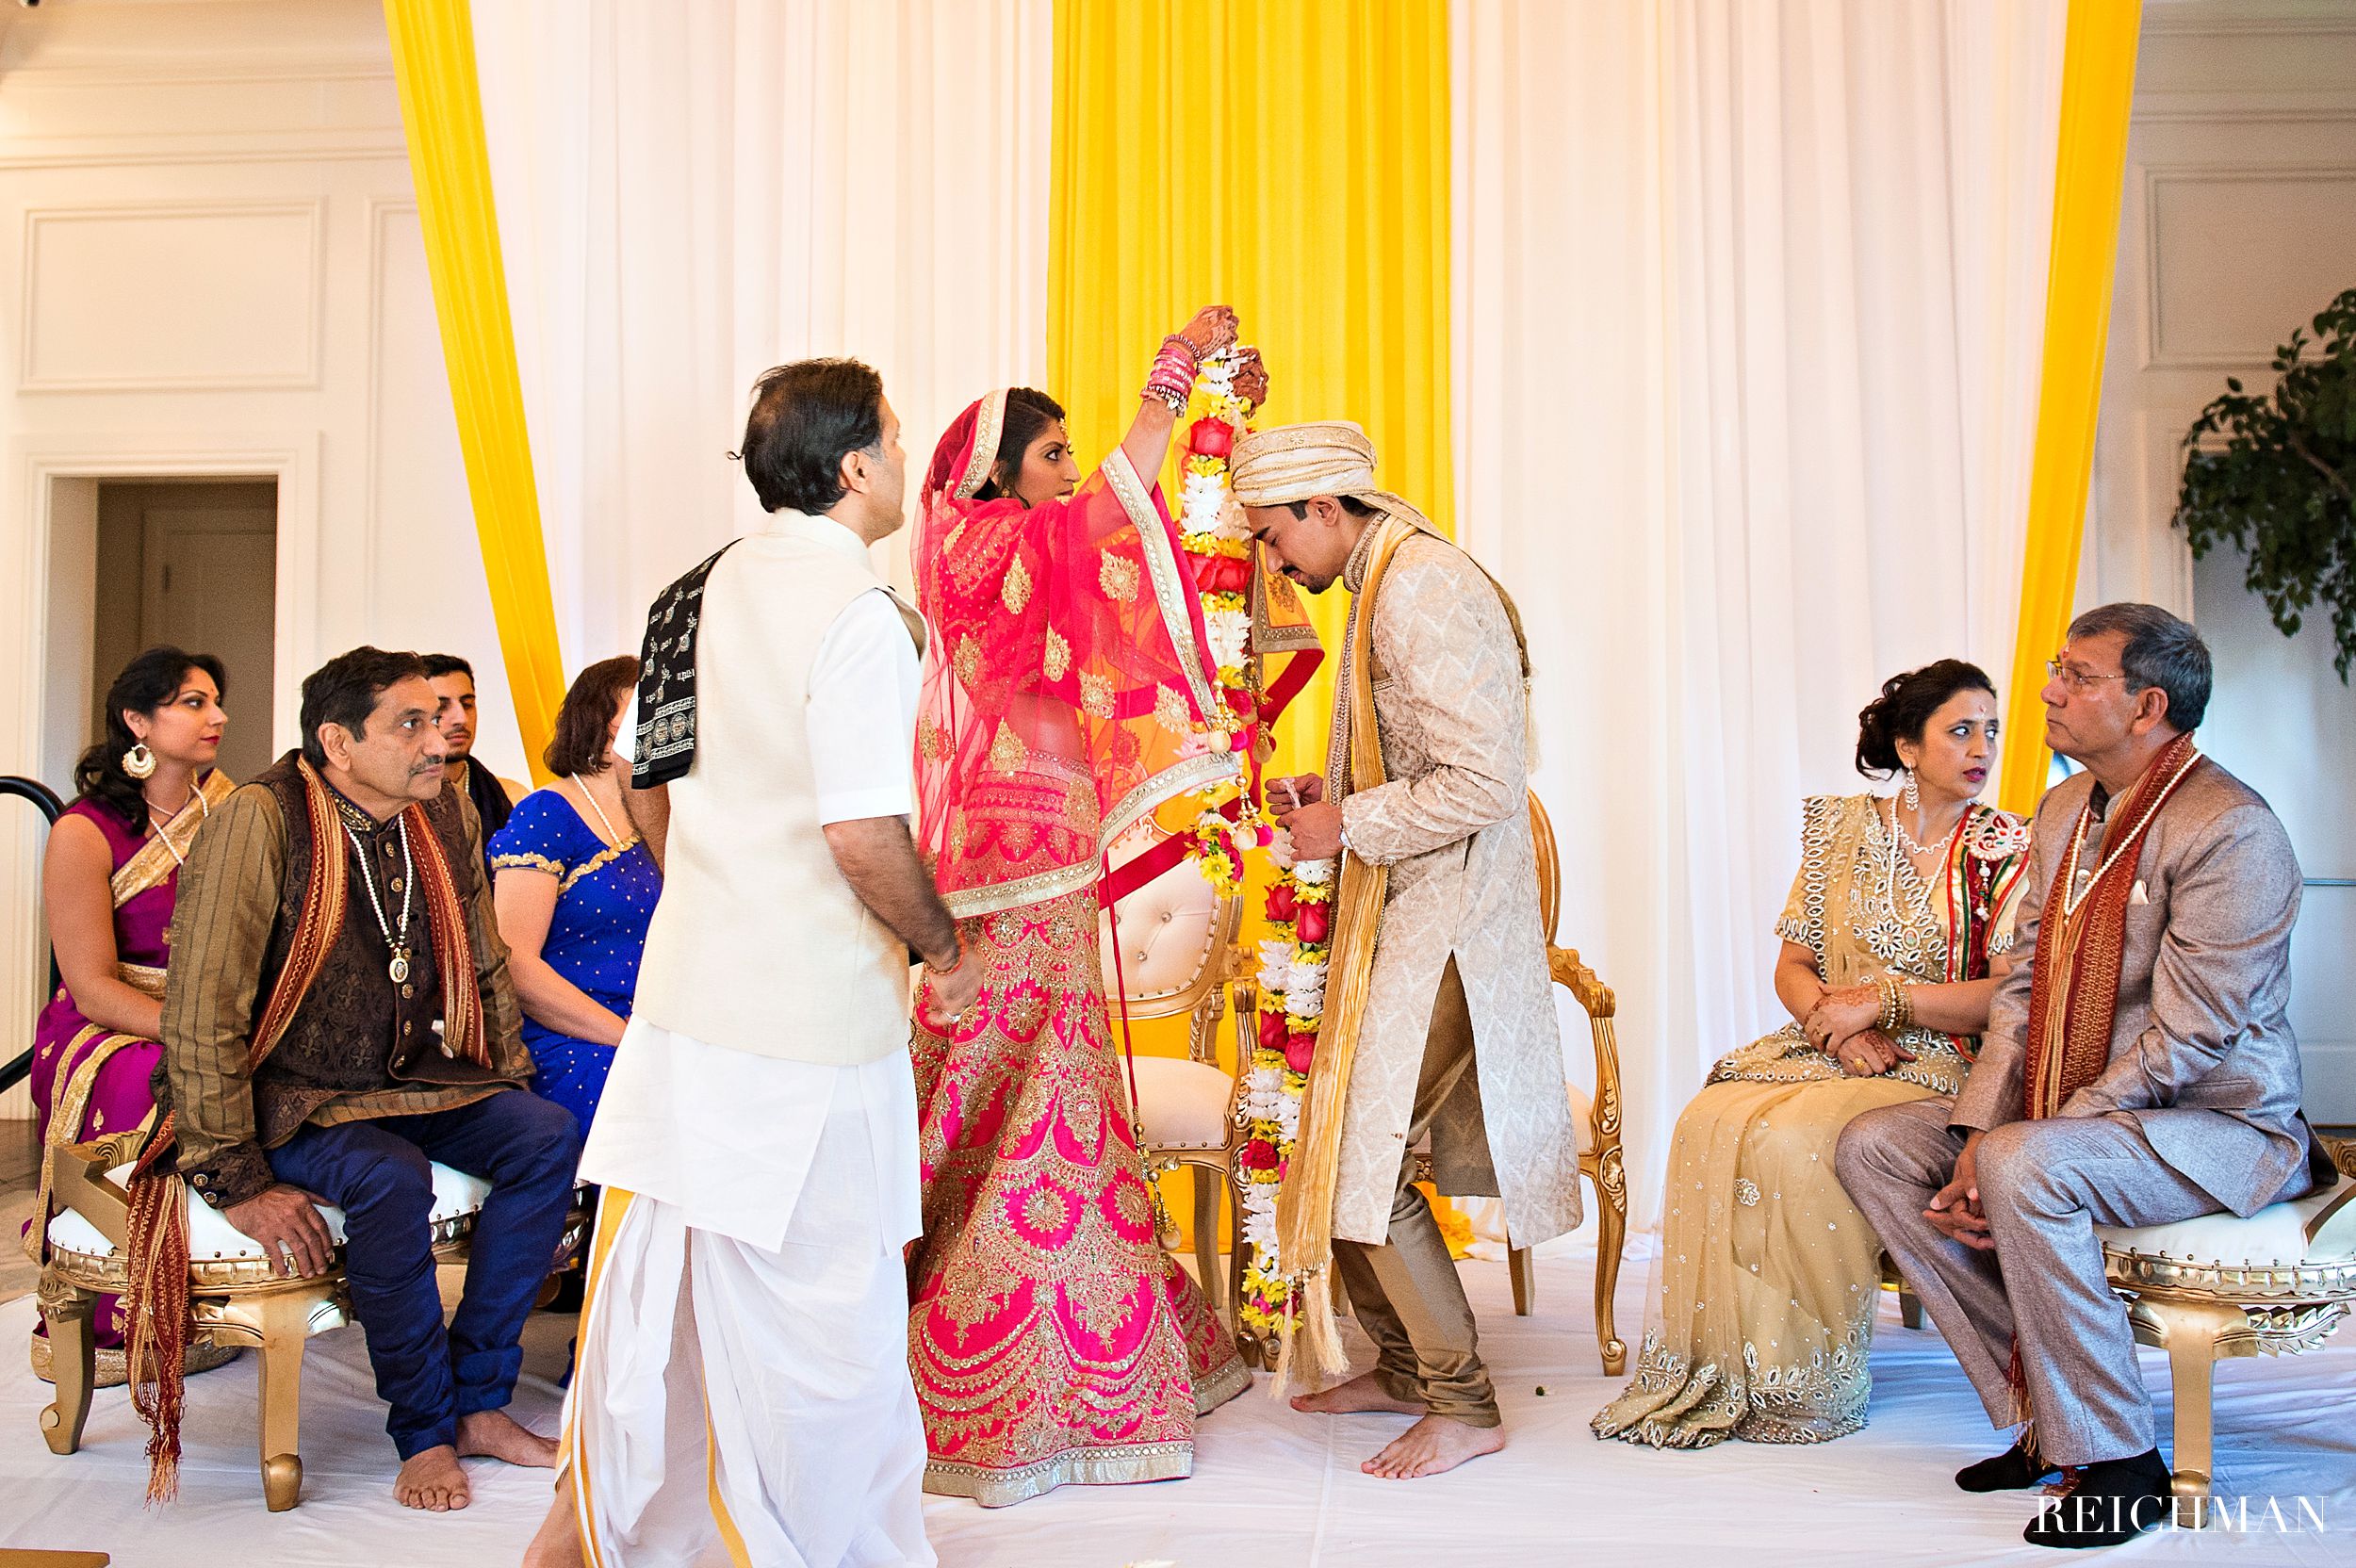 057st-regis-atlanta-hindu-wedding-057